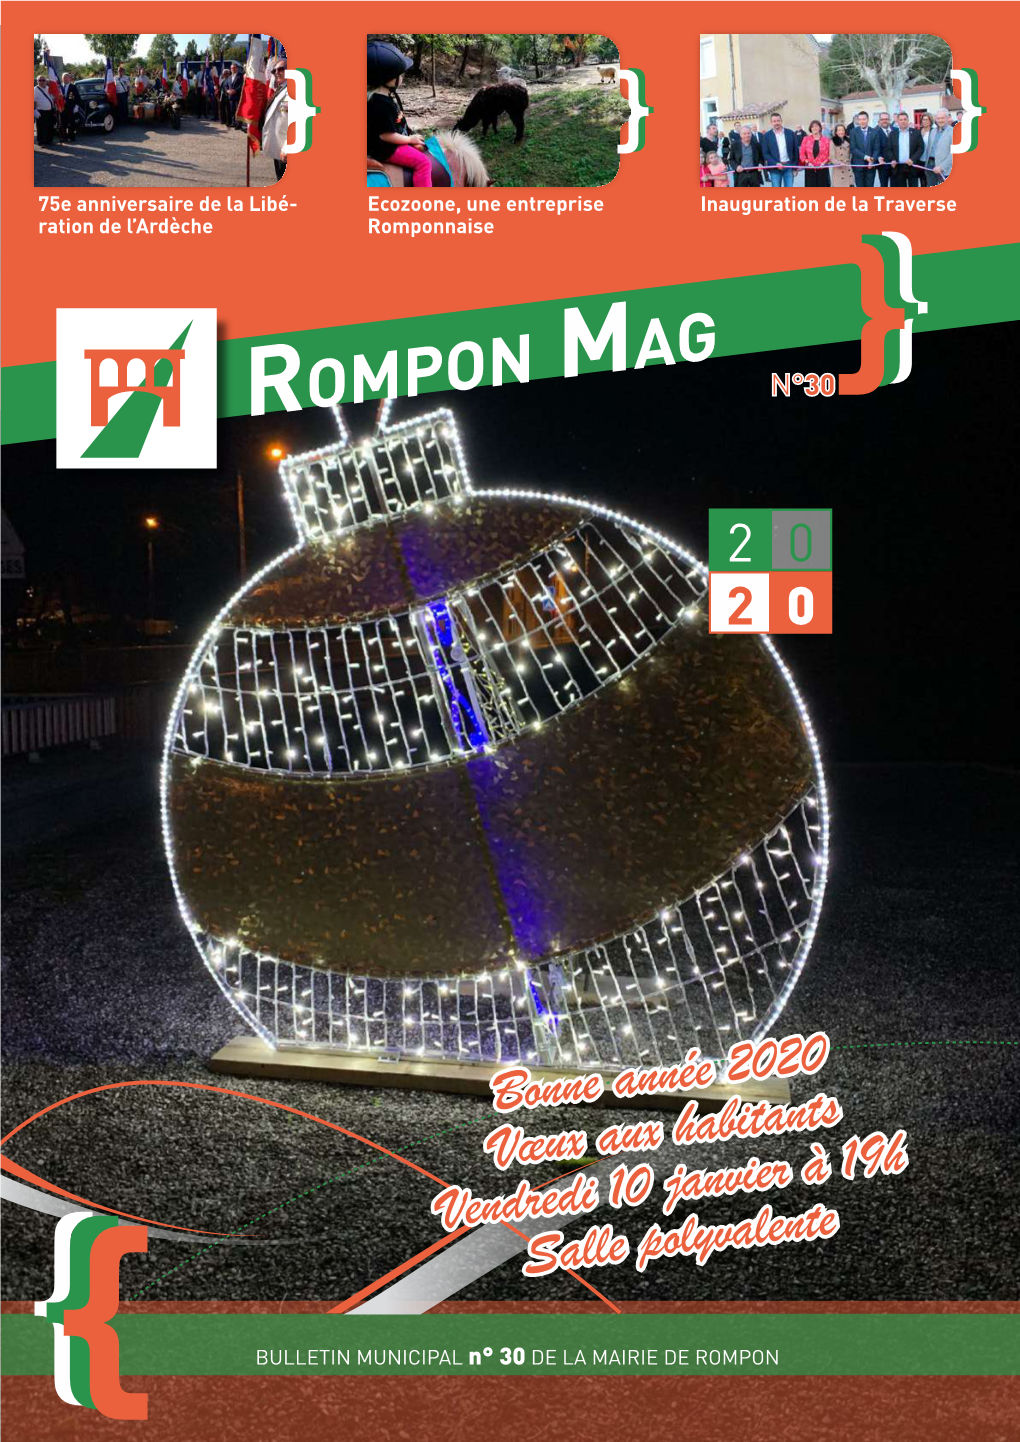 Rompon Mag 2020